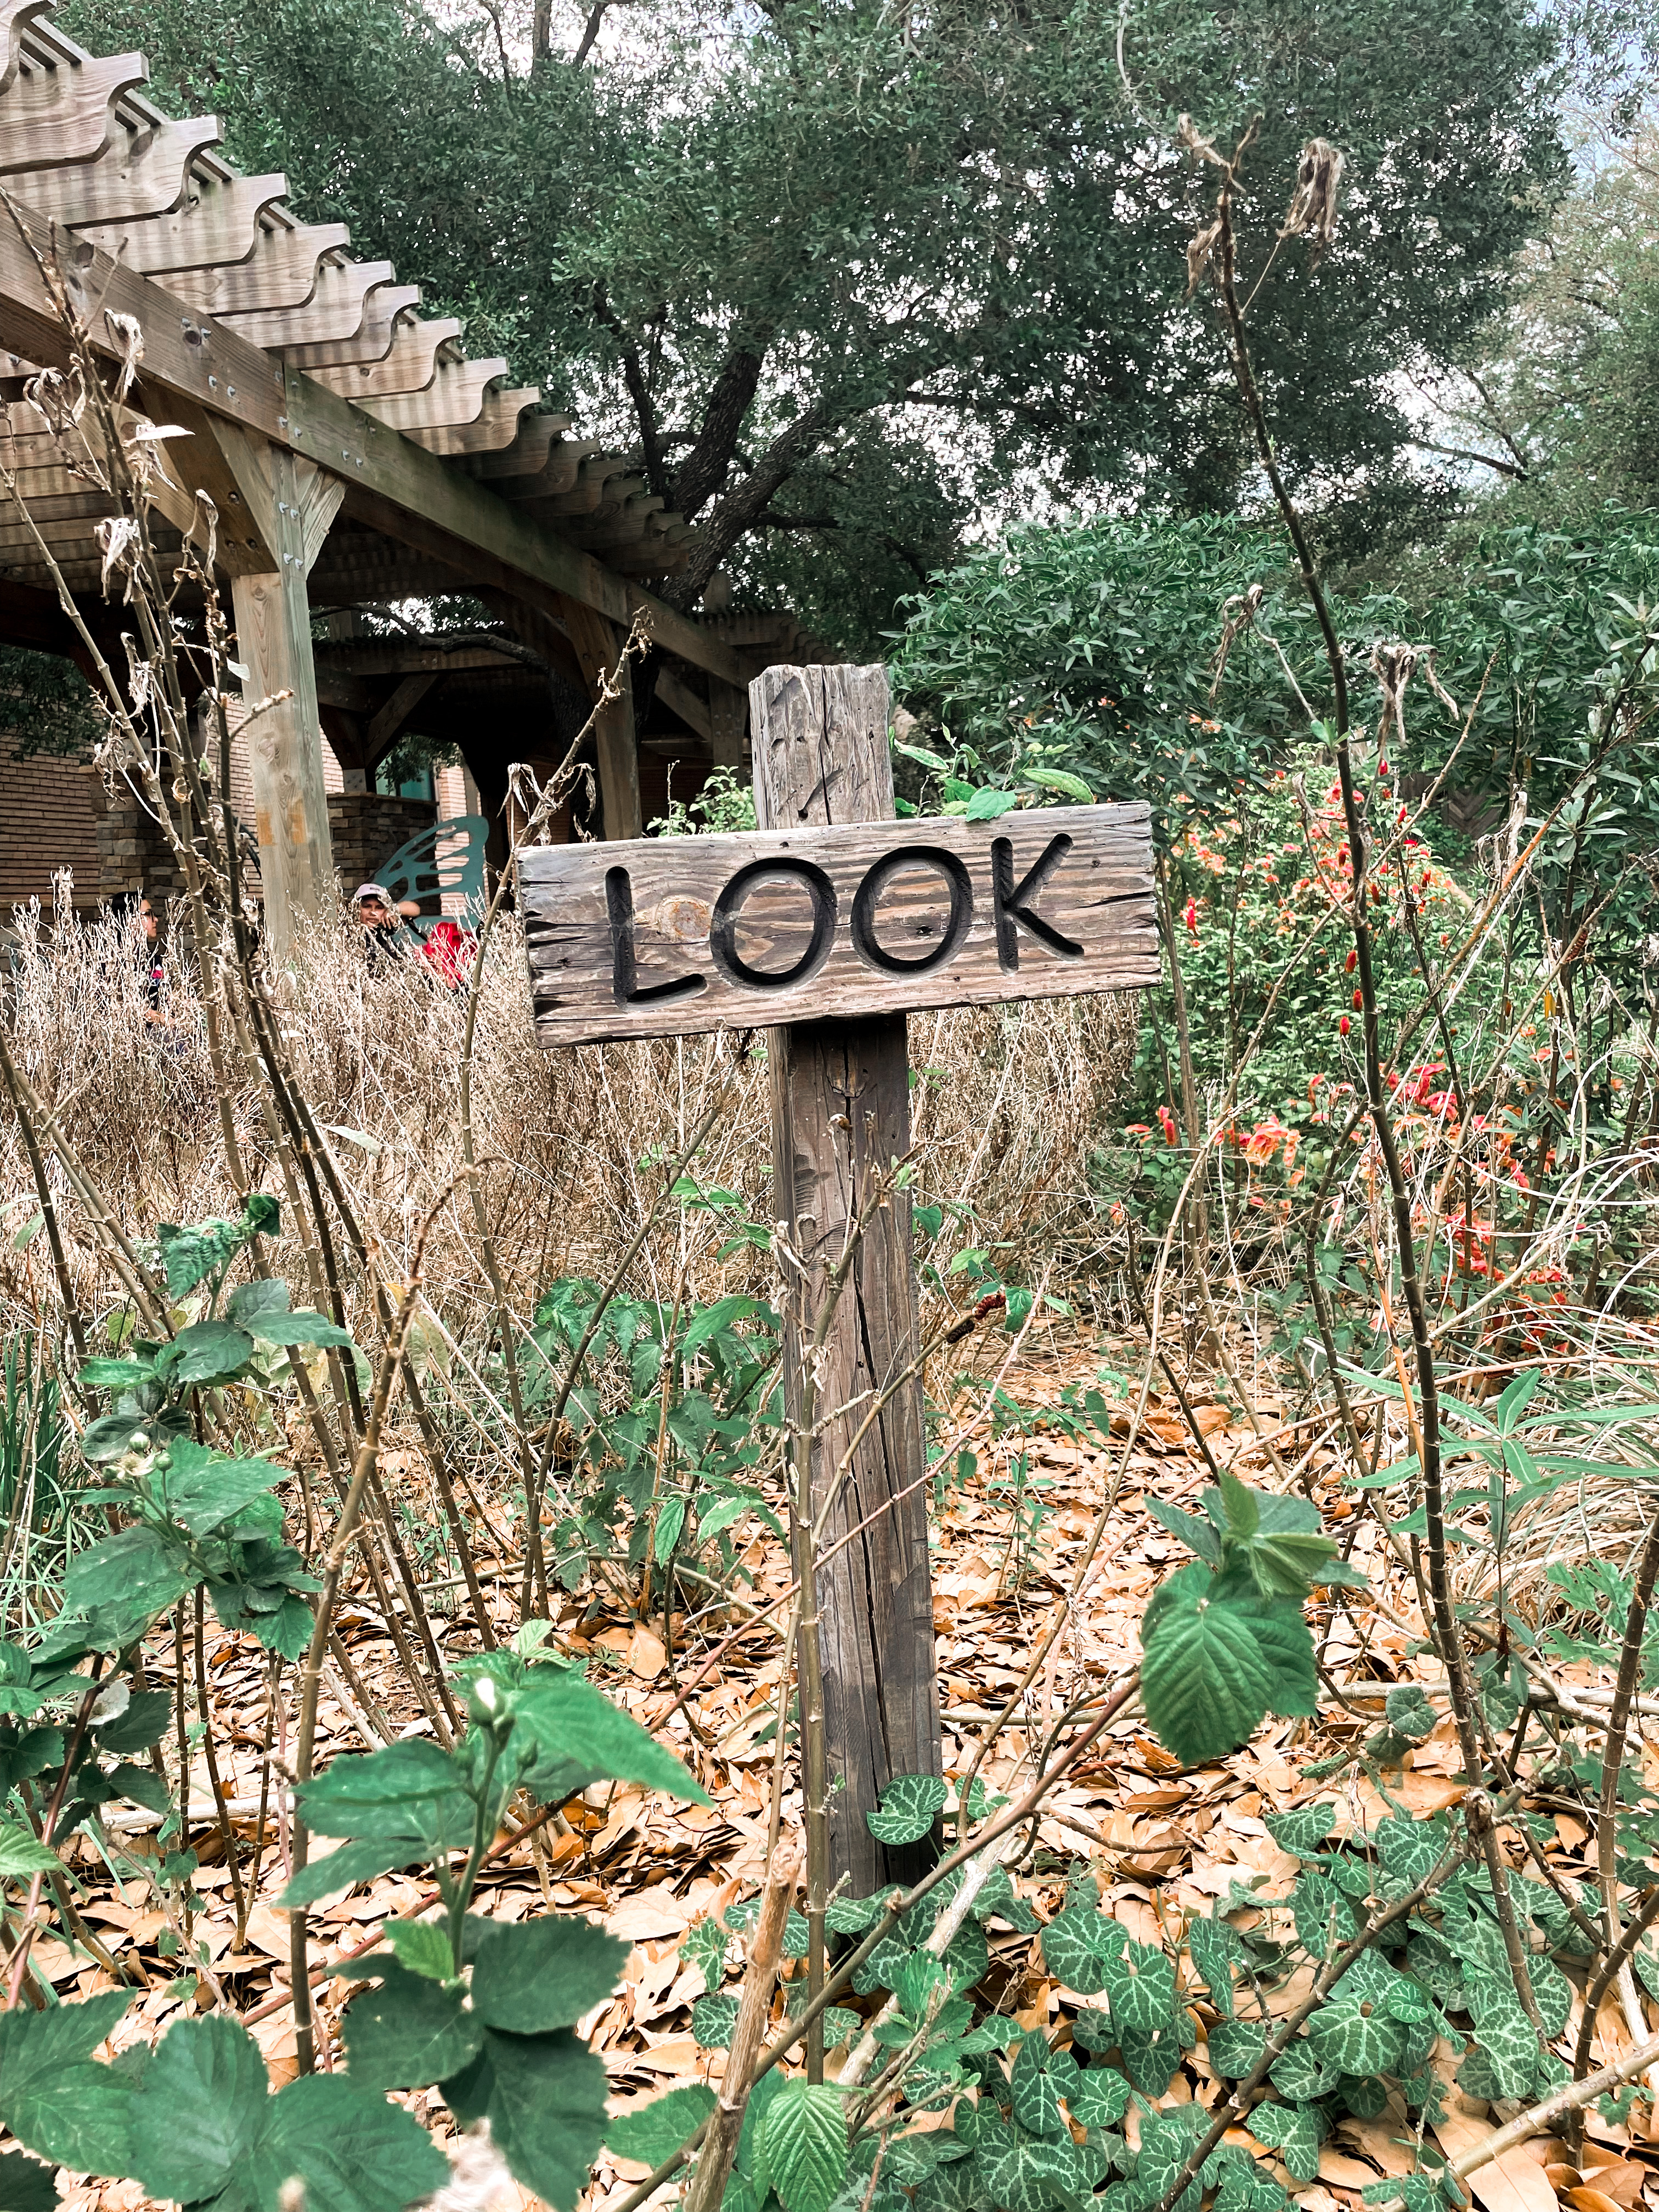 Explore the Wild at The Houston Zoo